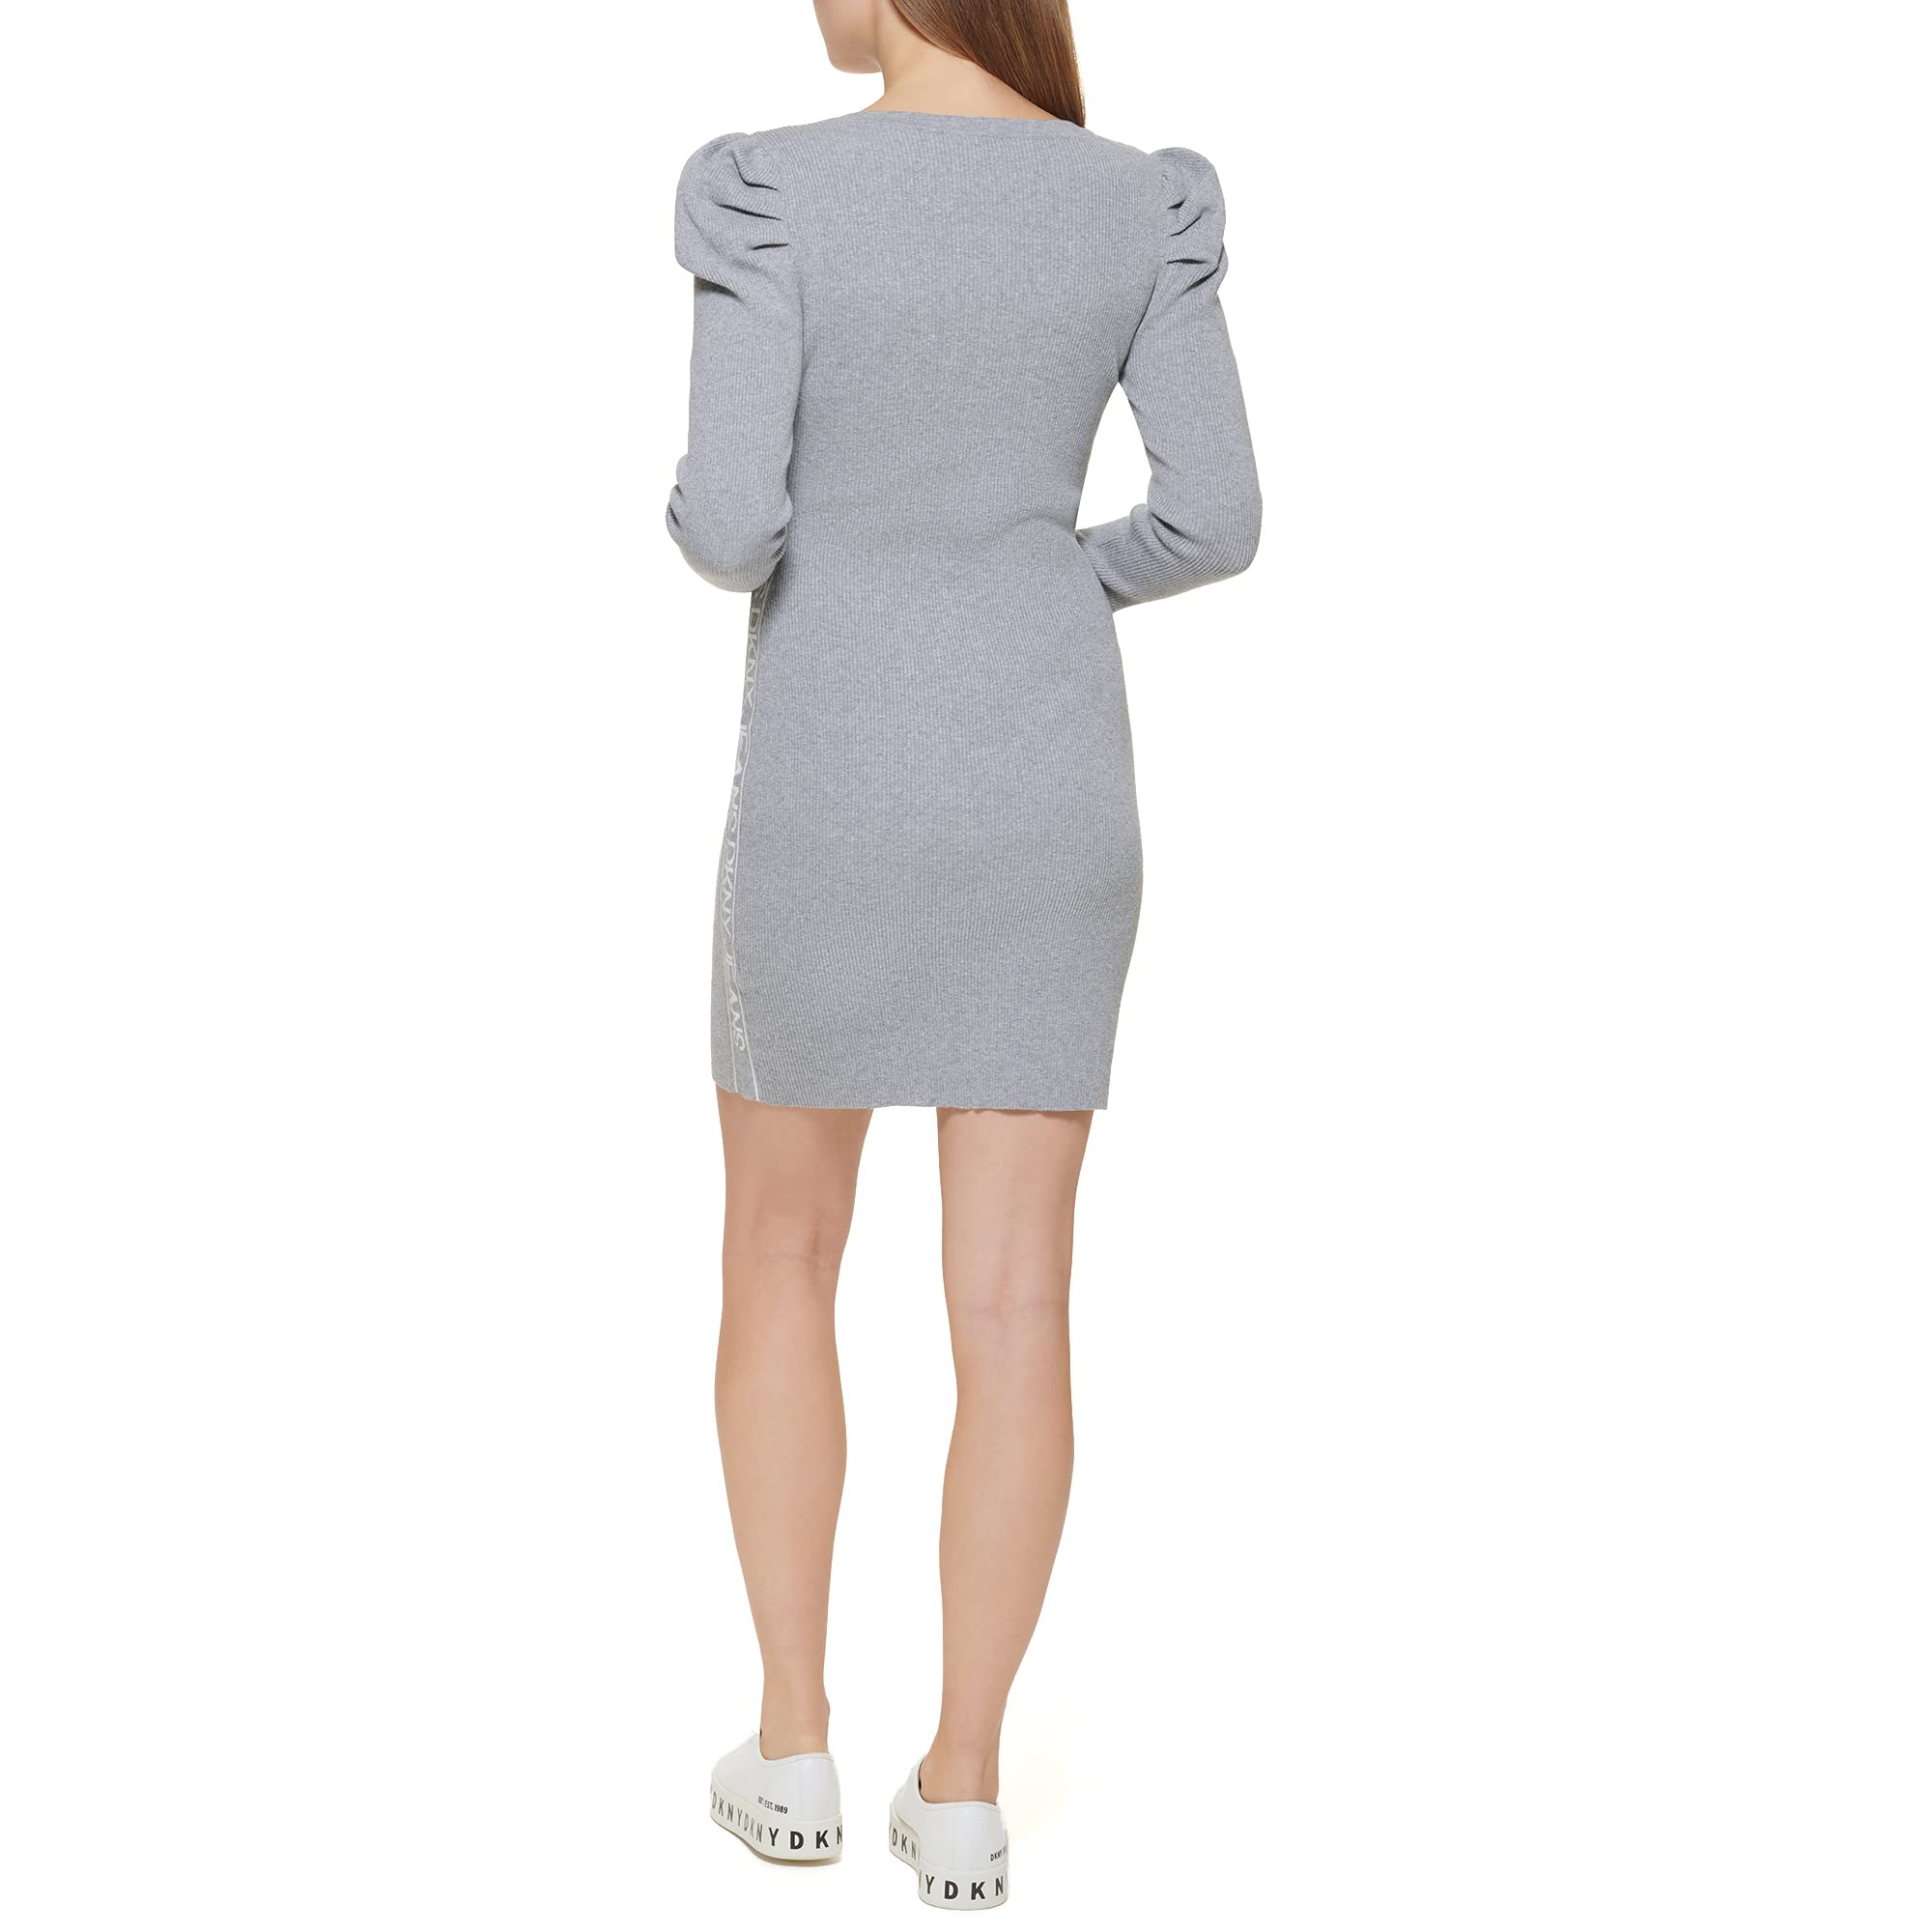 DKNY Women's 3/4 Cuff Sleeve Shealth Dress, Avenue Grey